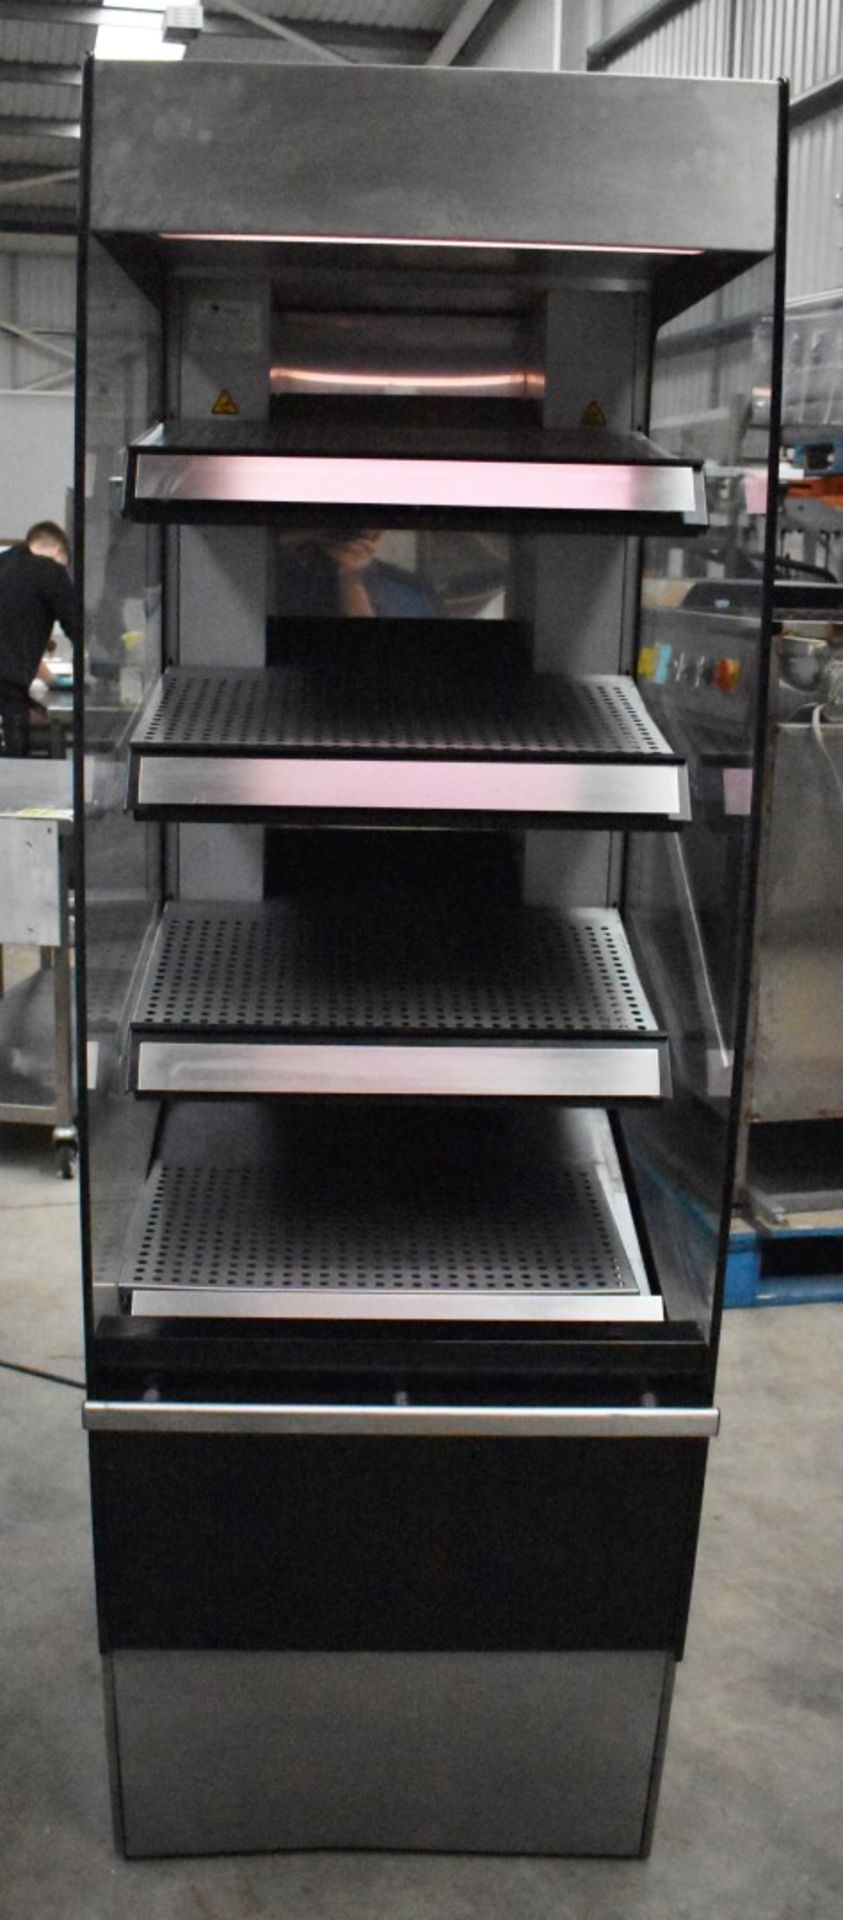 1 x Fri-Jado Four Tier Multi Deck Hot Food Warmer Heated Display Unit - Model MD60 - Contemporary - Image 10 of 12